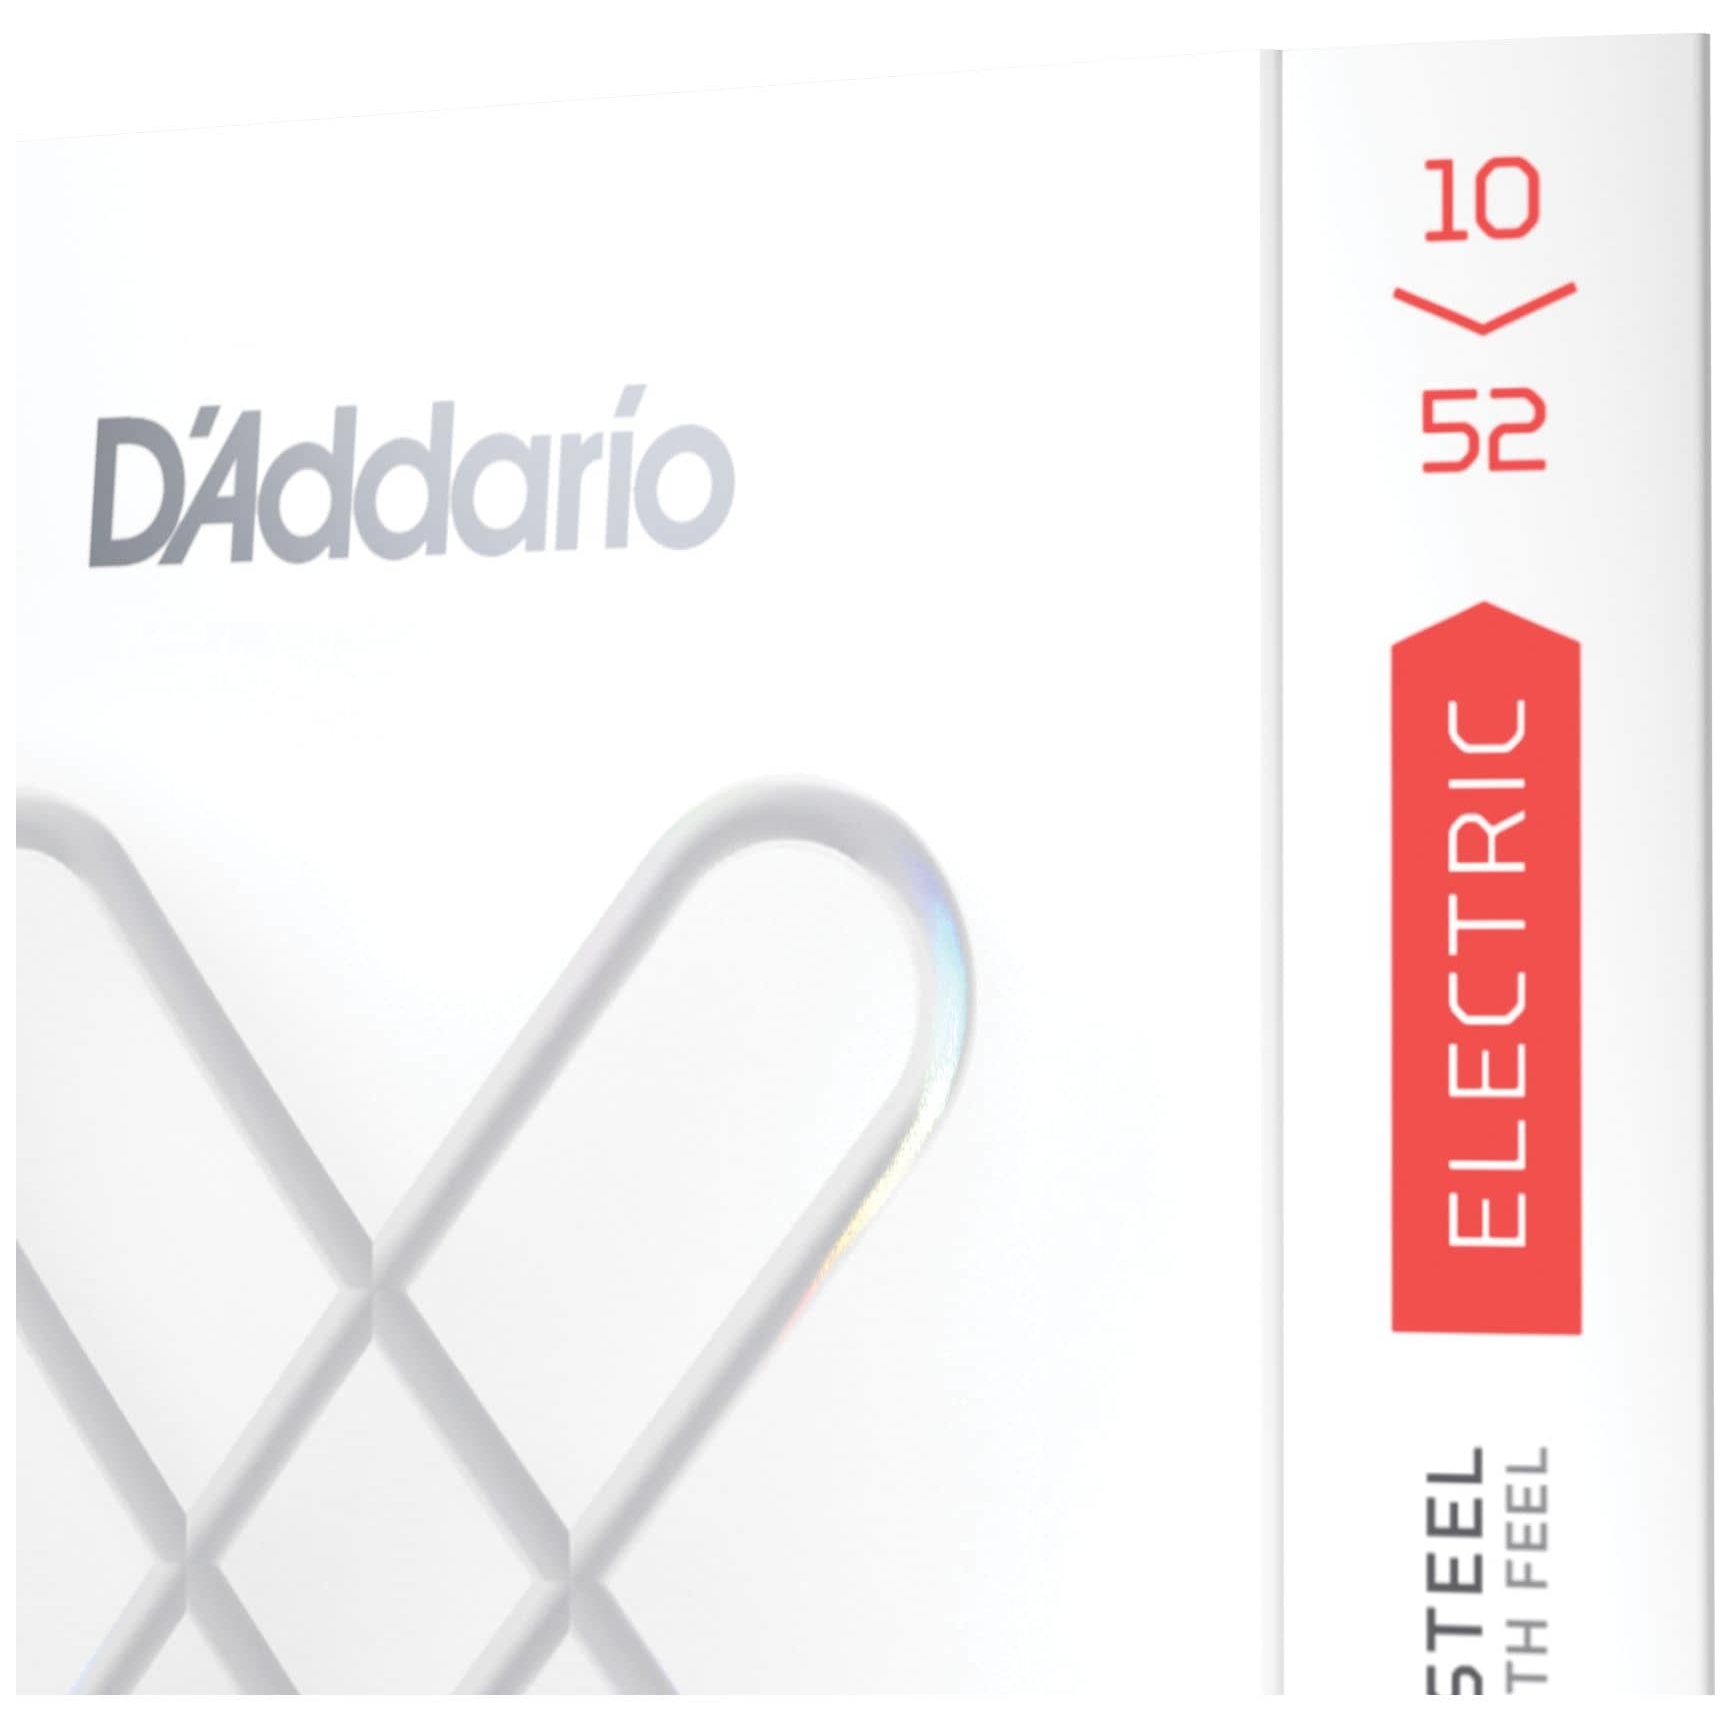 D’Addario XSE1052 - XS Nickel Coated | 010-052 | Light Top/H eavy Bottom